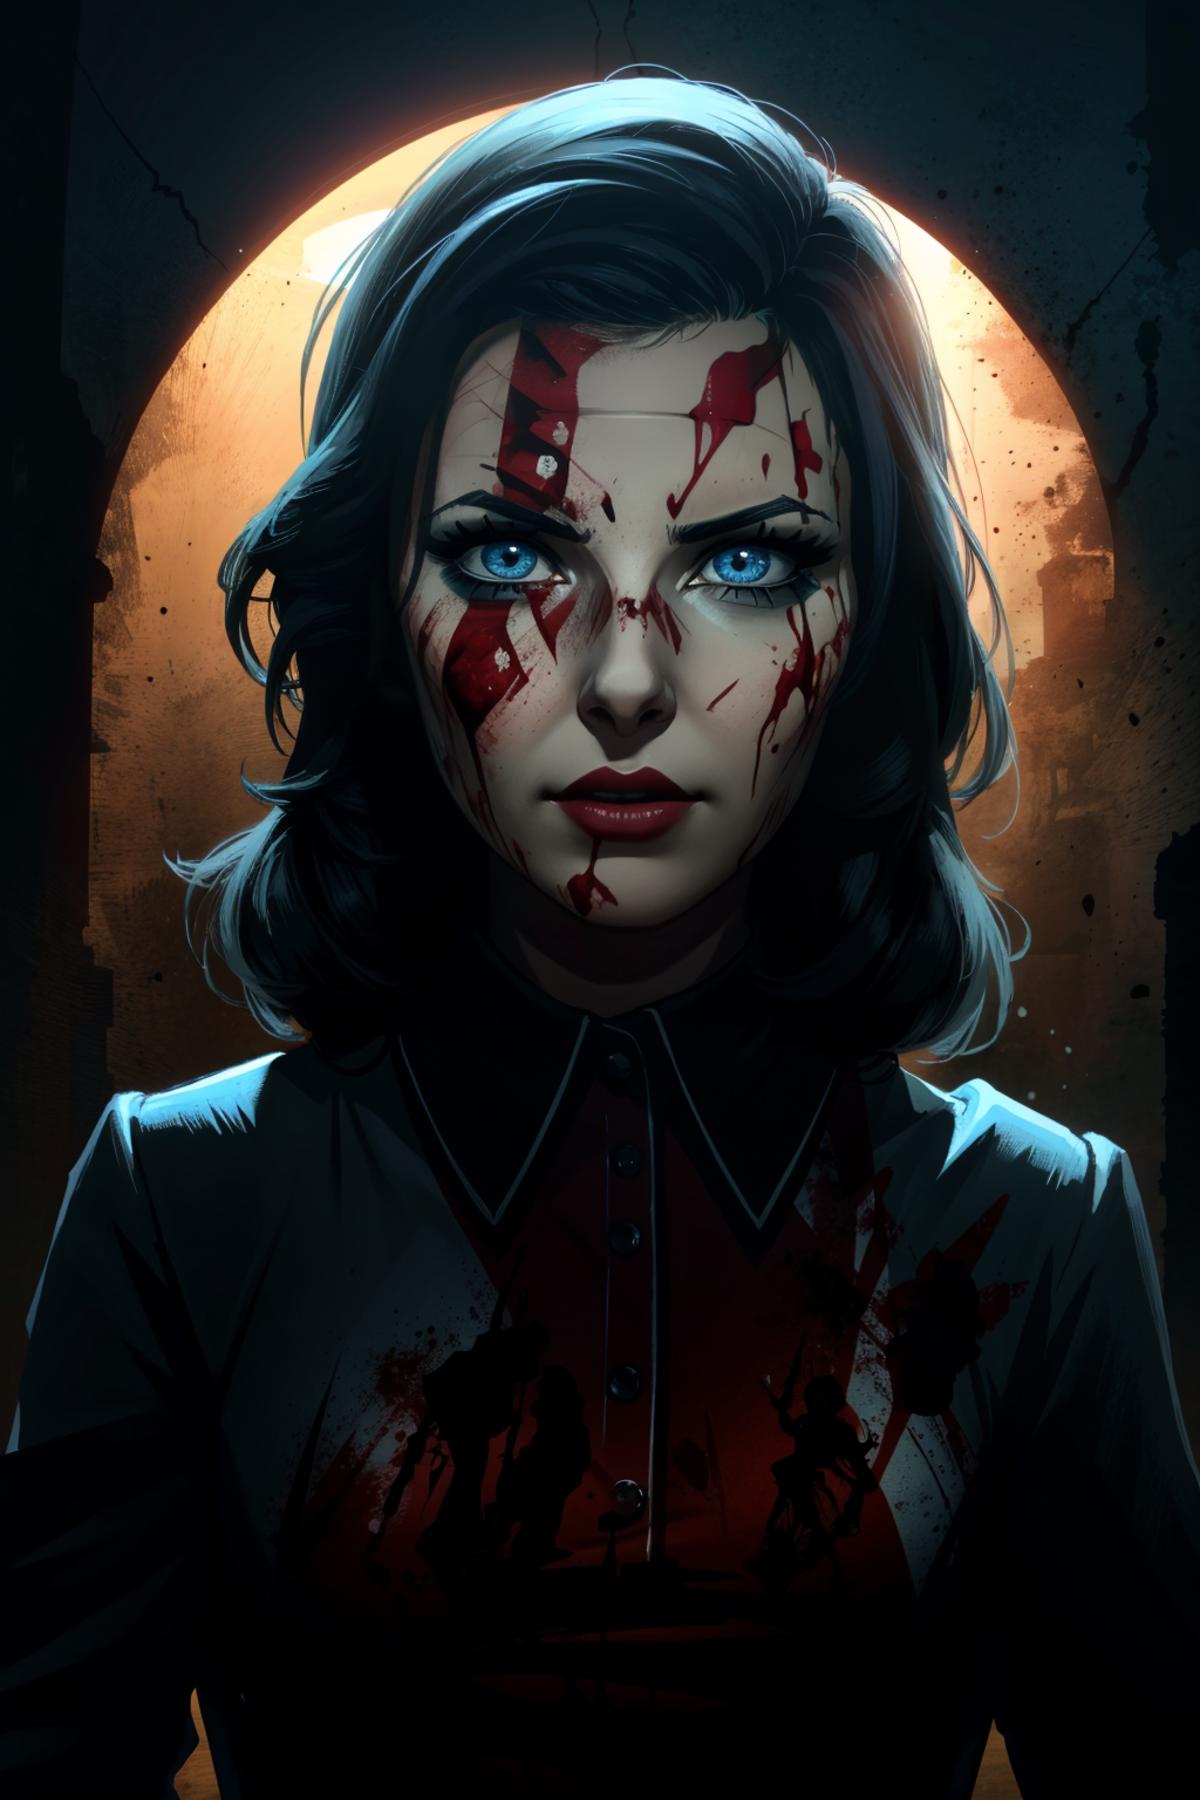 Elizabeth (Old) | BioShock Infinite image by soul3142